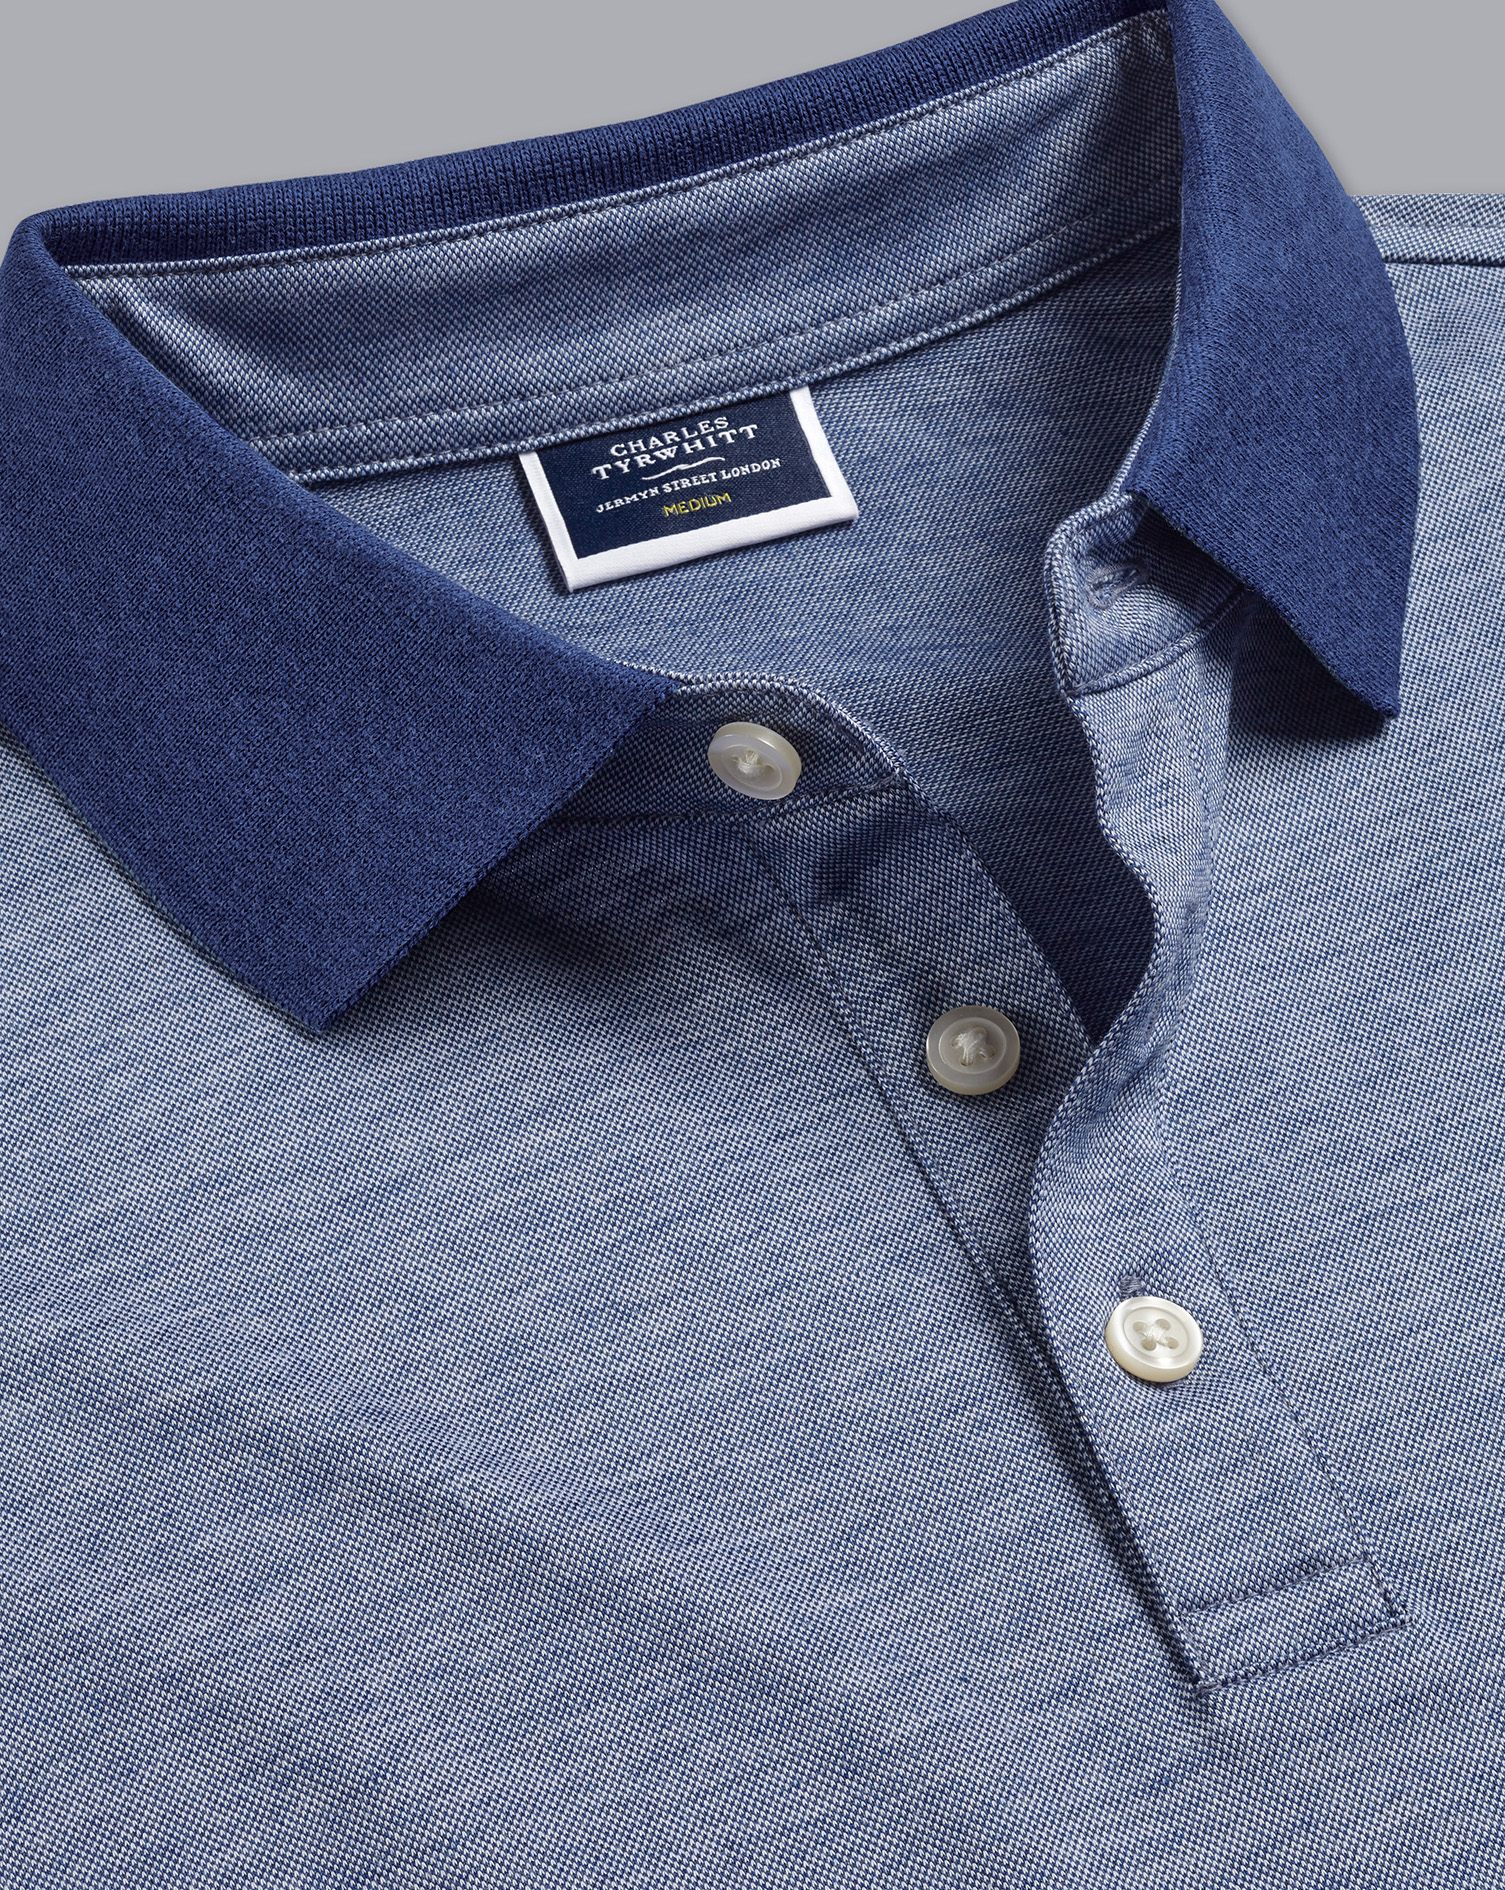 Men's Charles Tyrwhitt Birdseye Pique Polo Shirt - Royal Blue Size Medium Cotton
